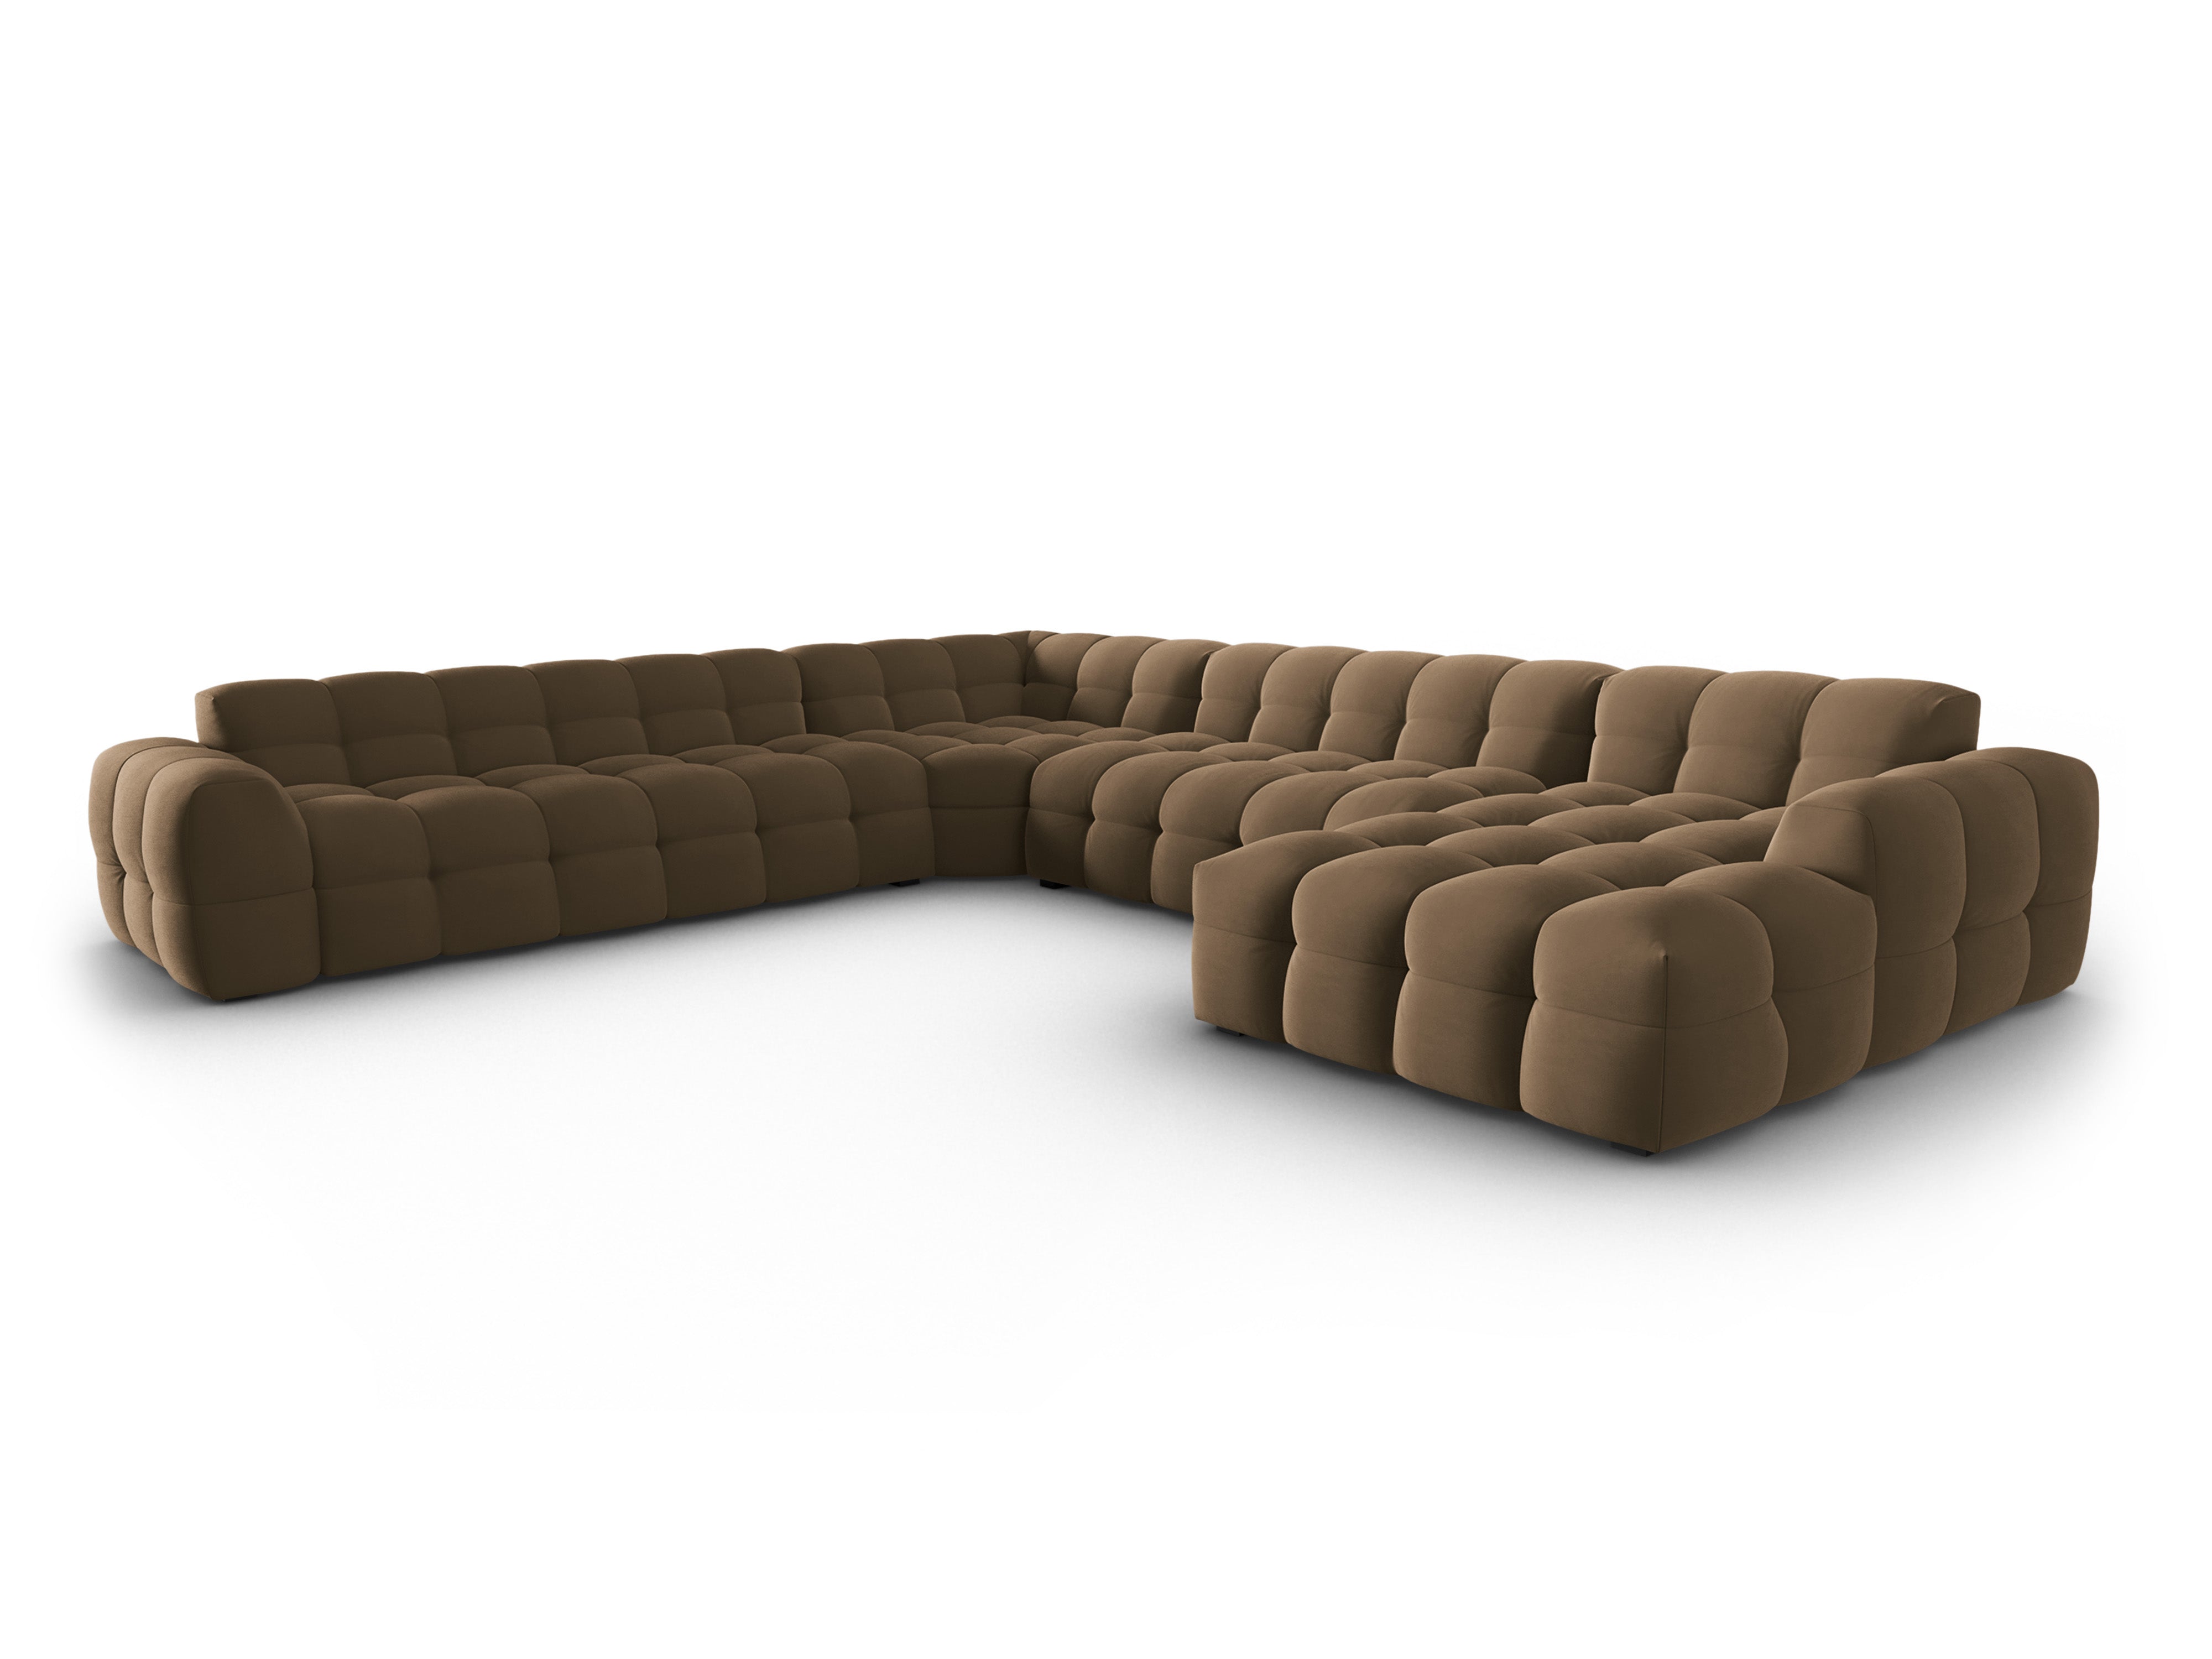 Velvet Panoramic Left Corner Sofa, "Nino", 7 Seats, 378x322x68
Made in Europe, Maison Heritage, Eye on Design